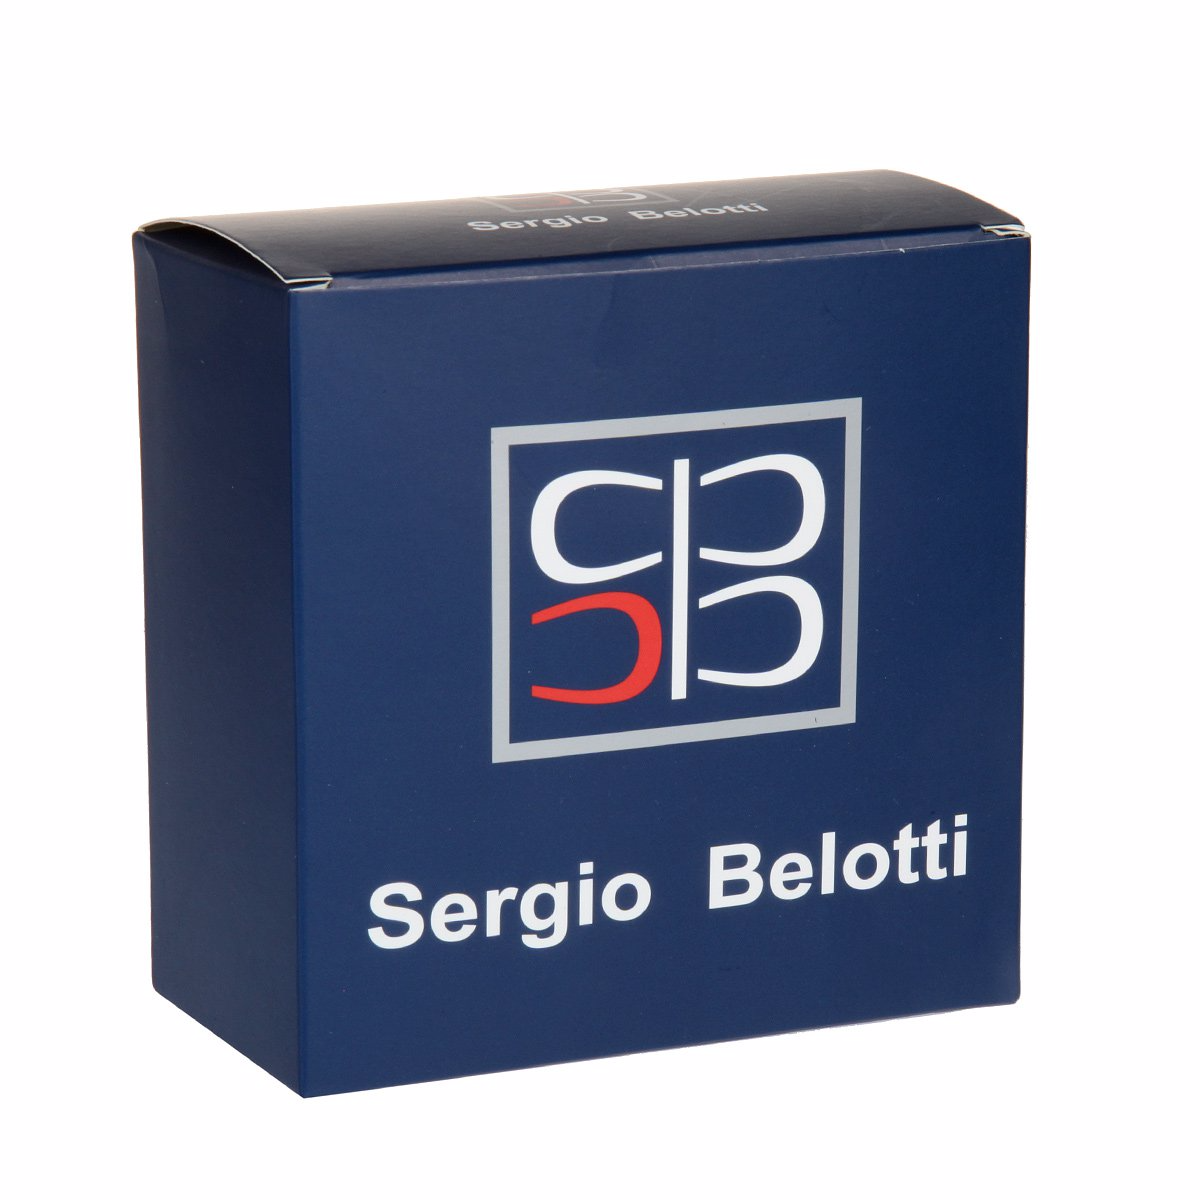 Ремень Sergio Belotti6655/40 T.Moro Graffit Ремни и пояса